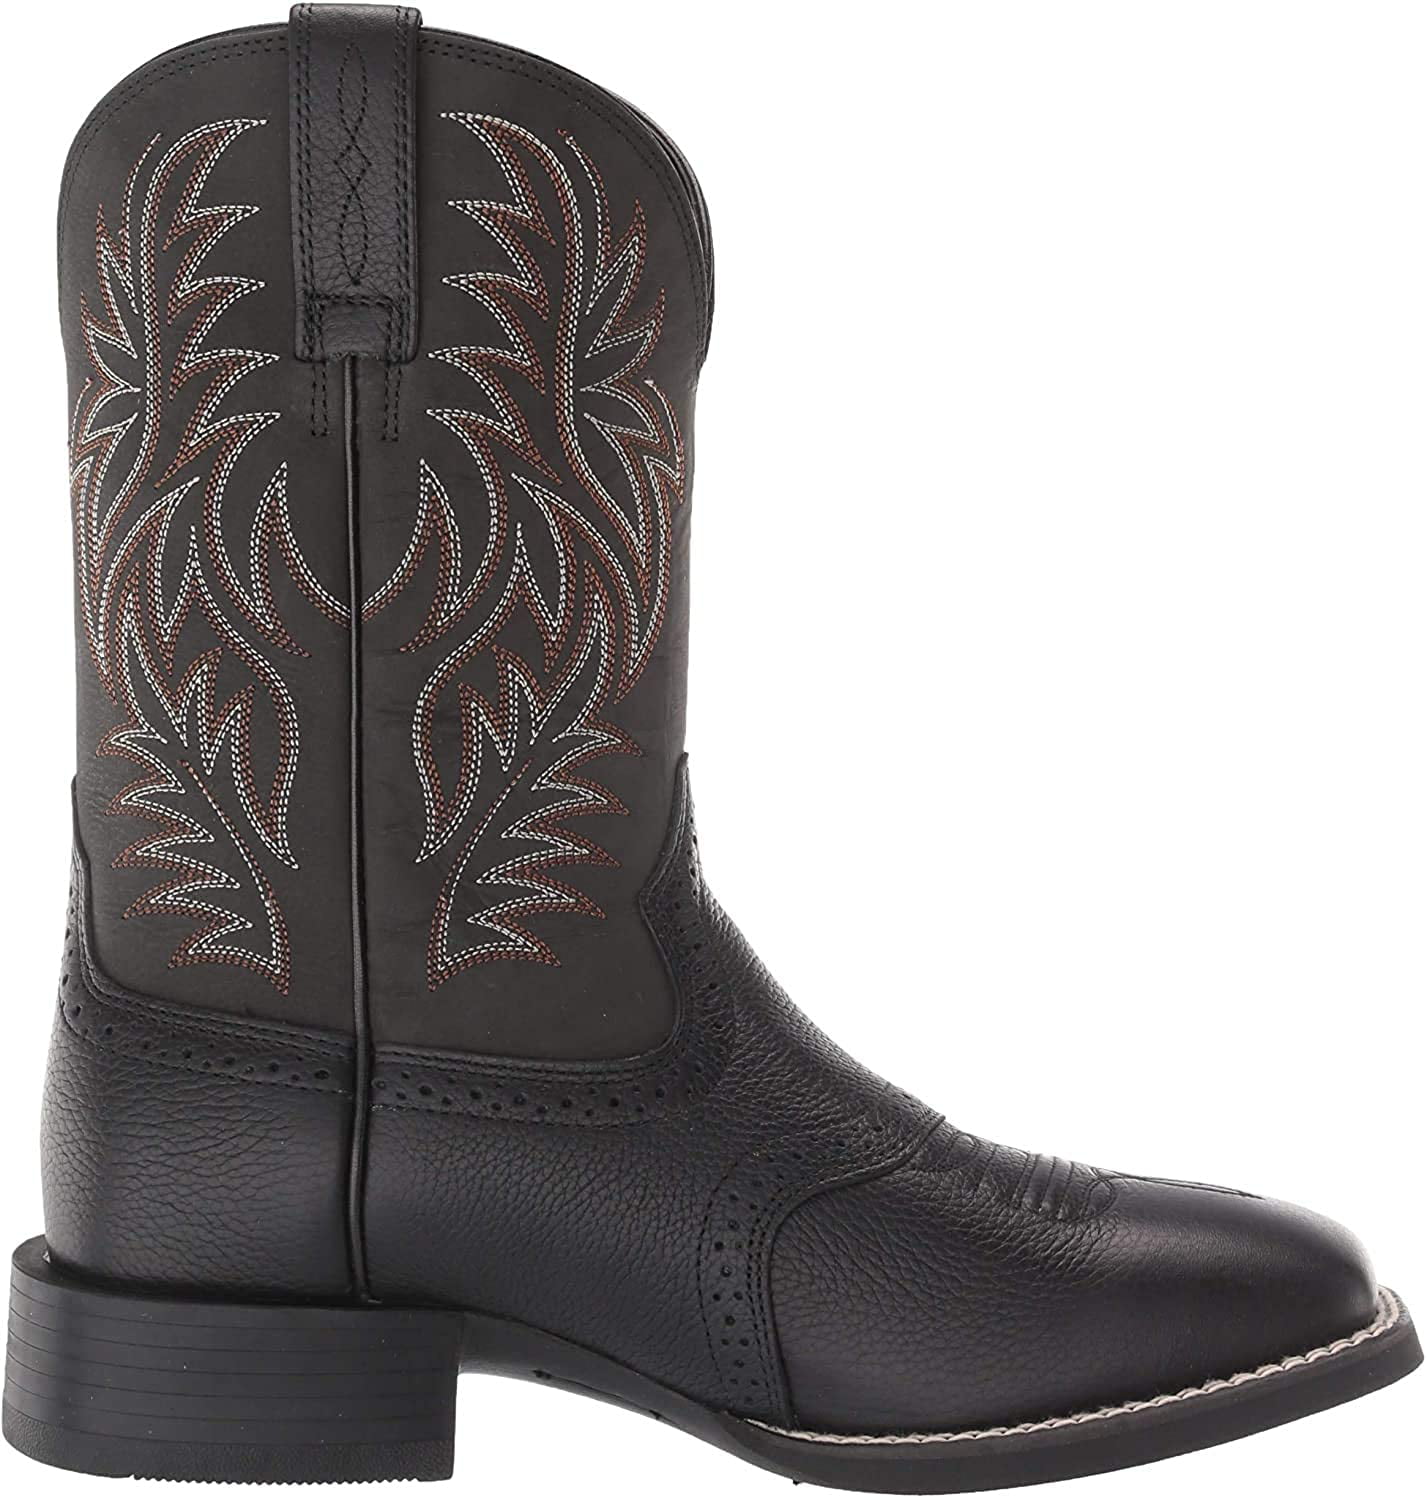 Ariat Men's Sport Western Cowboy Boot, Black, 11 EE US | Walmart Canada